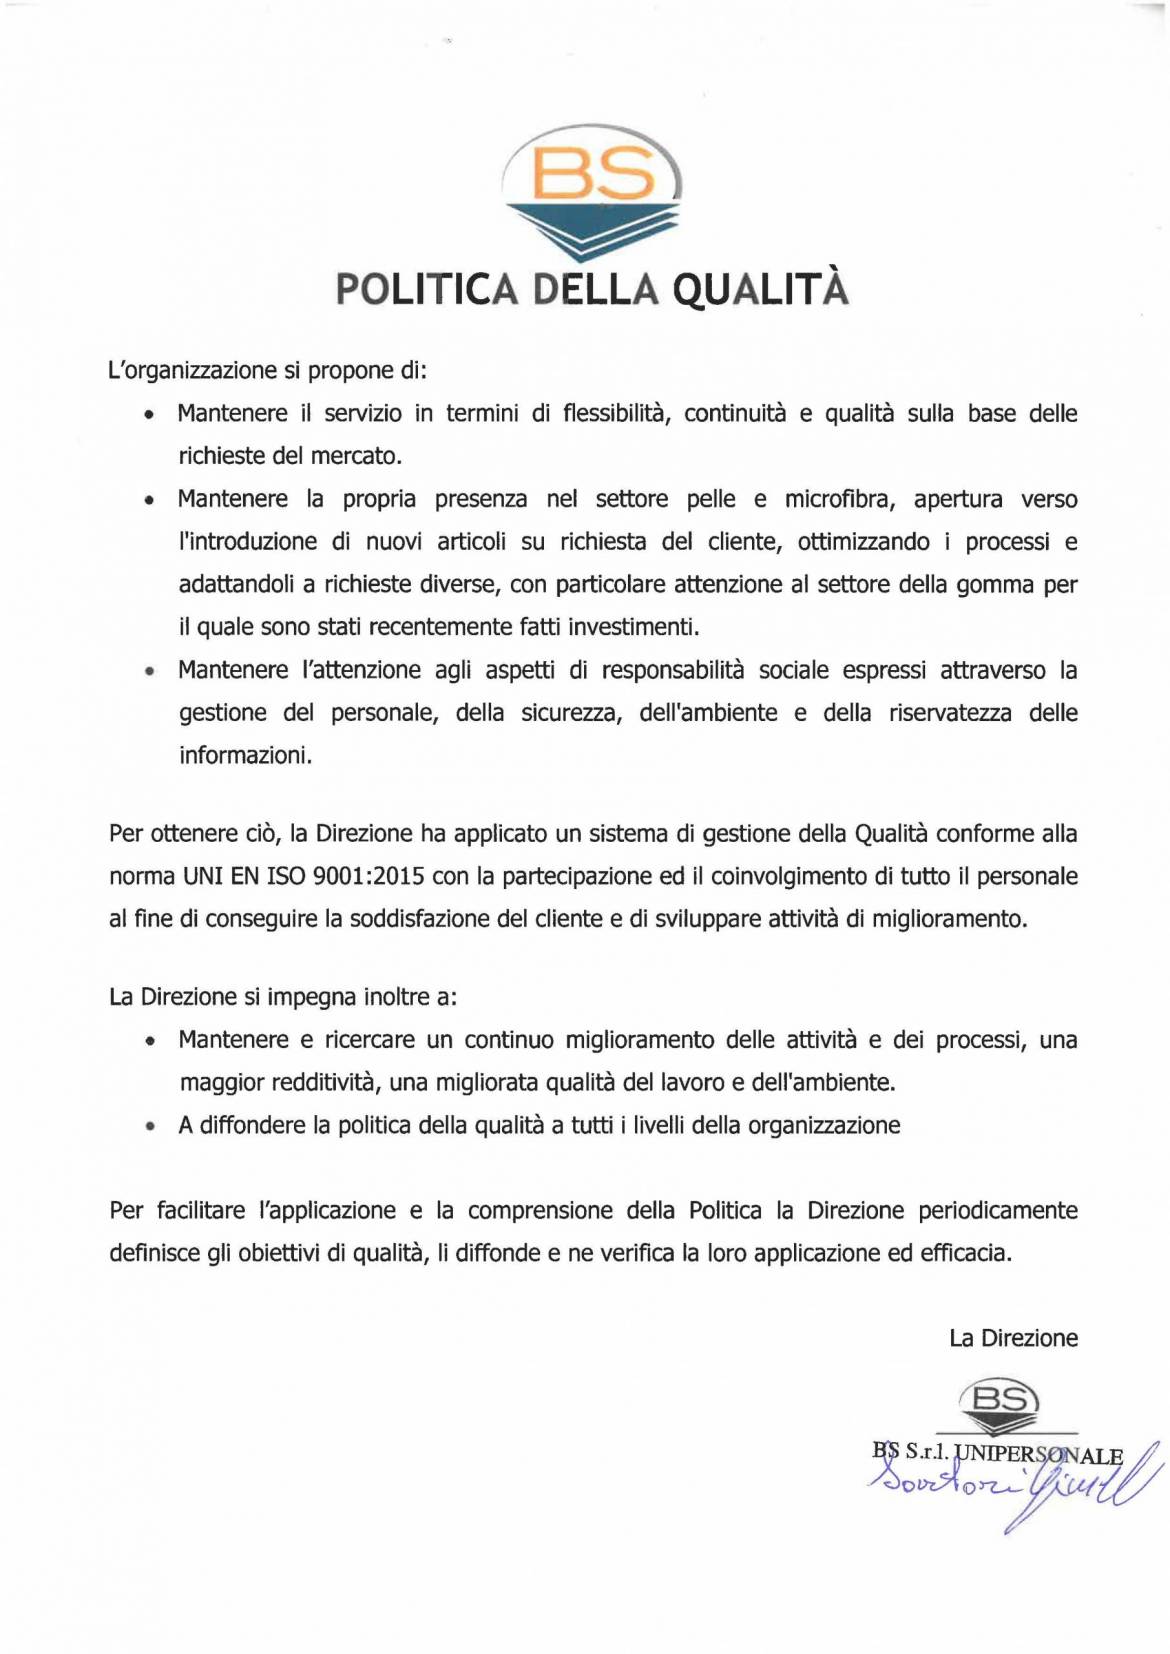 POLITICA-QUALITA-BS-scaled.jpg